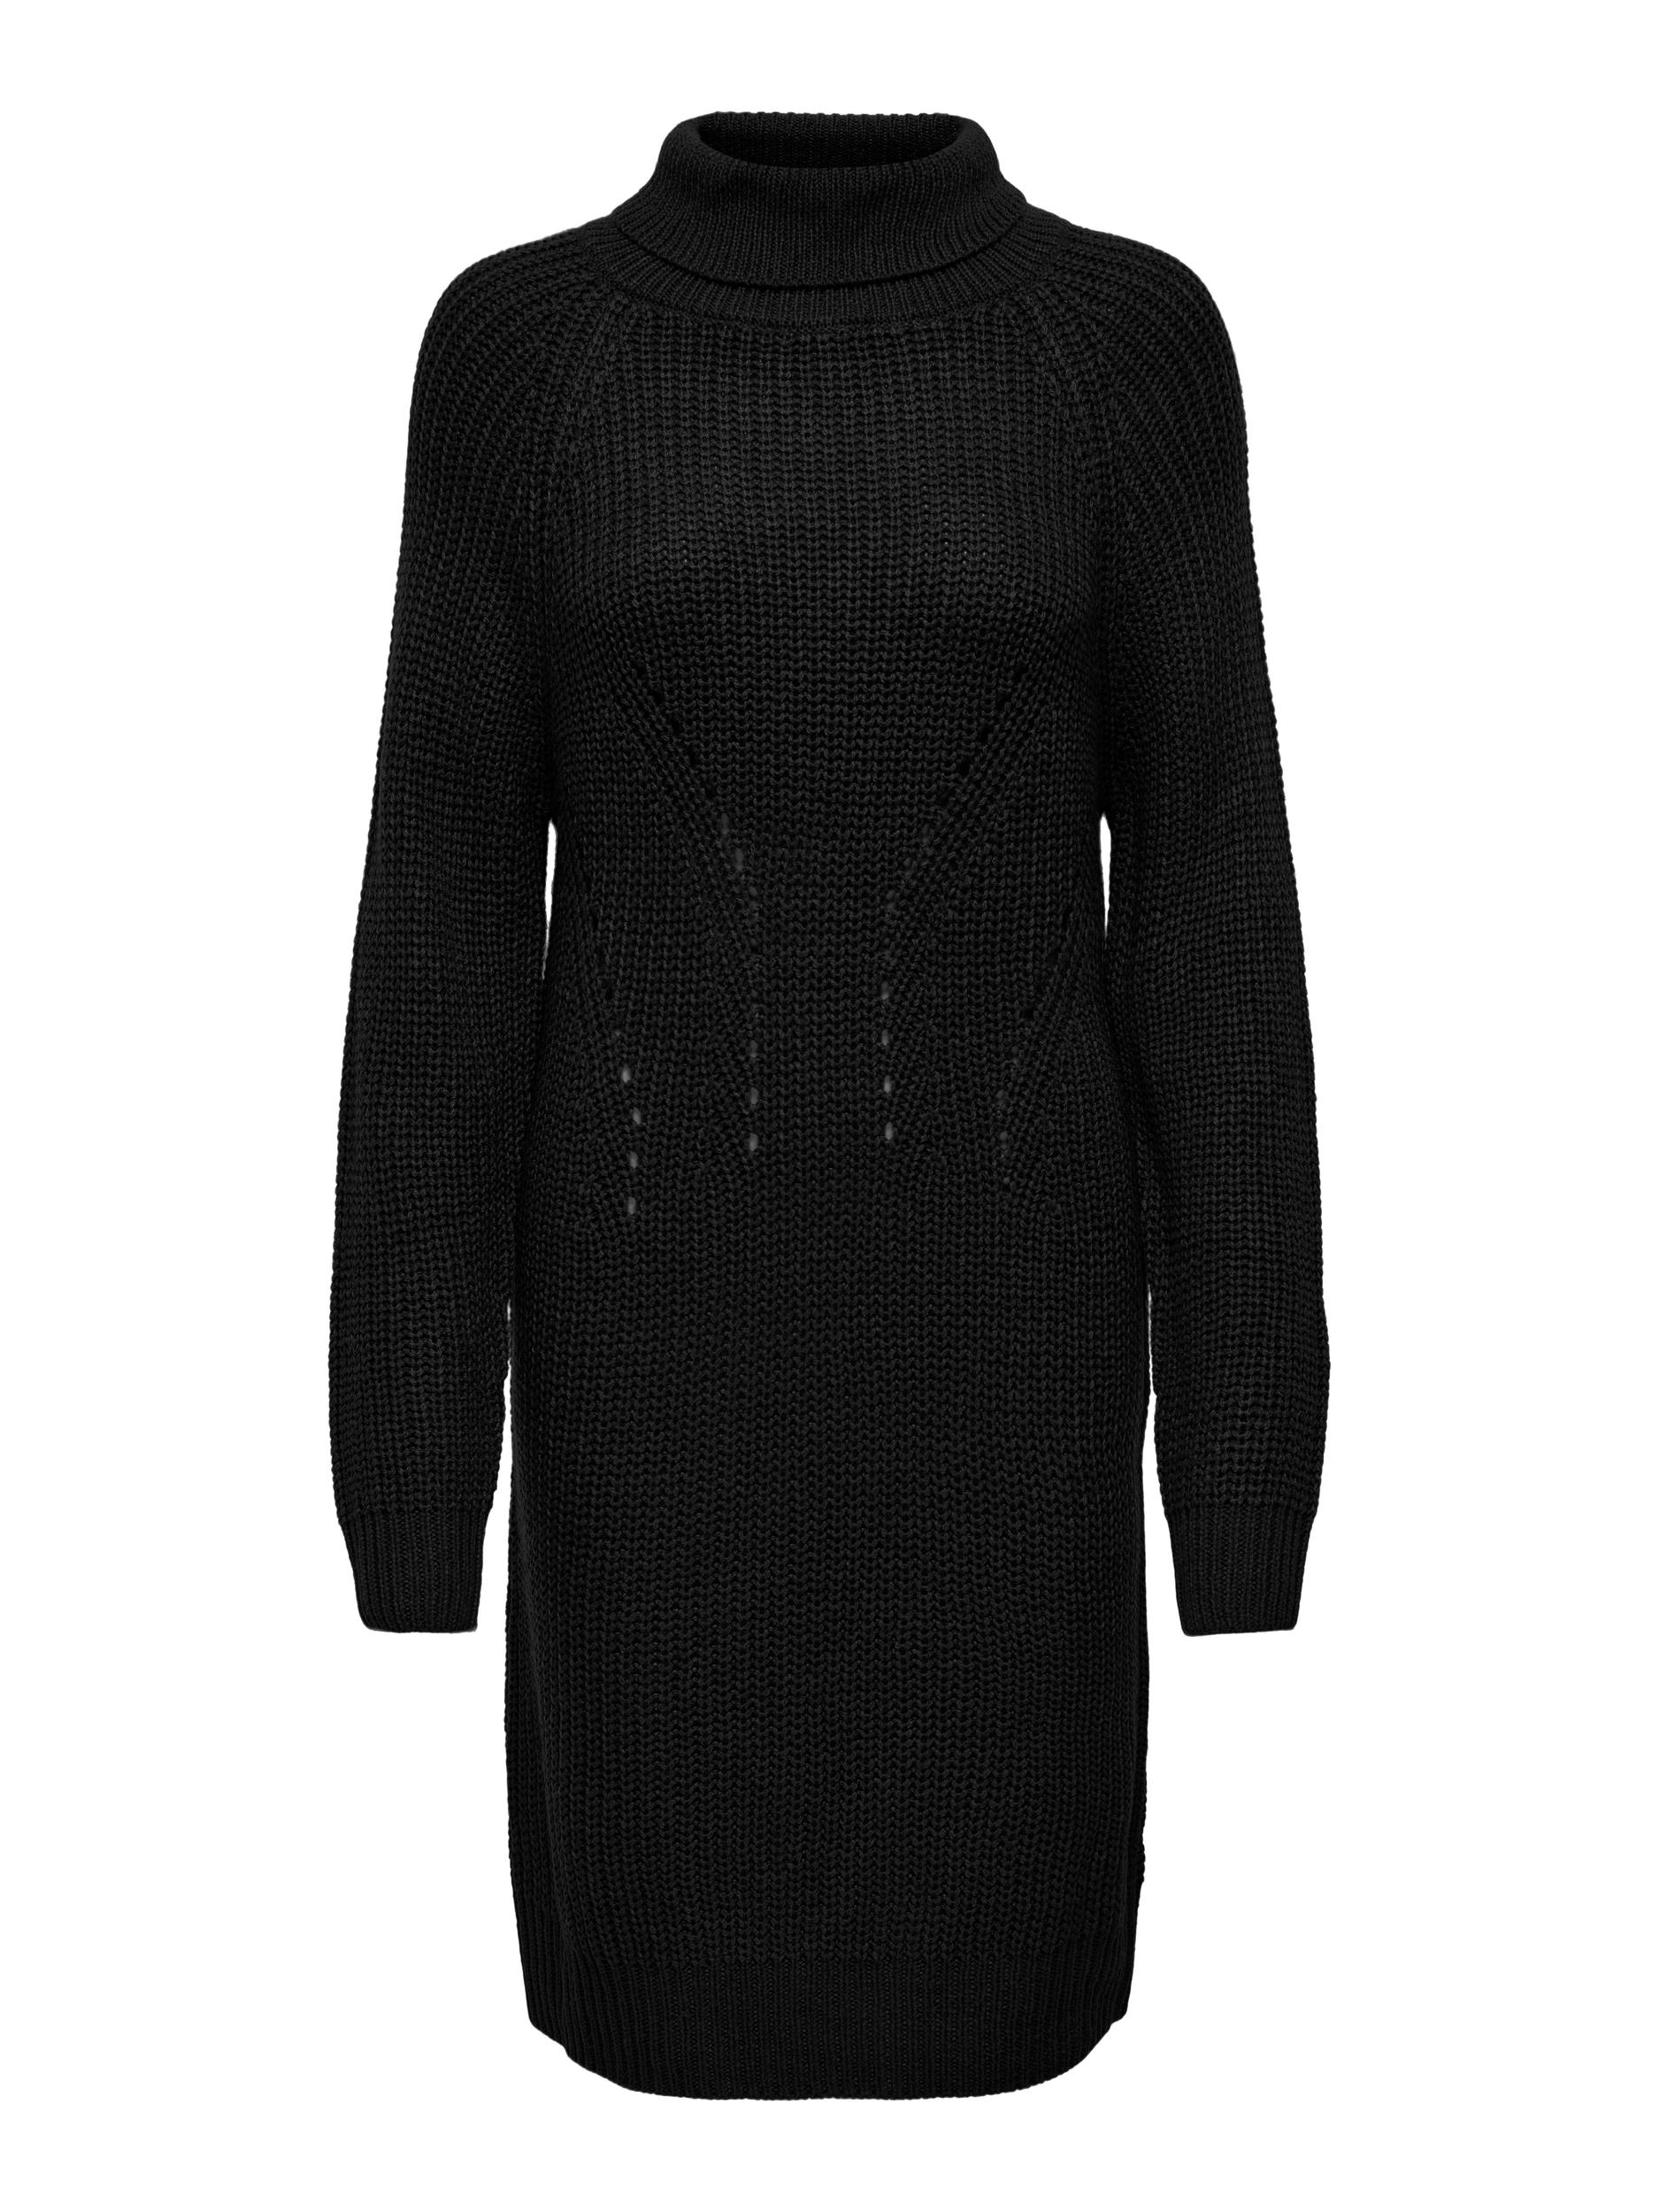 Jacqueline de Yong Dámské šaty JDYNEW Relaxed Fit 15300295 Black S